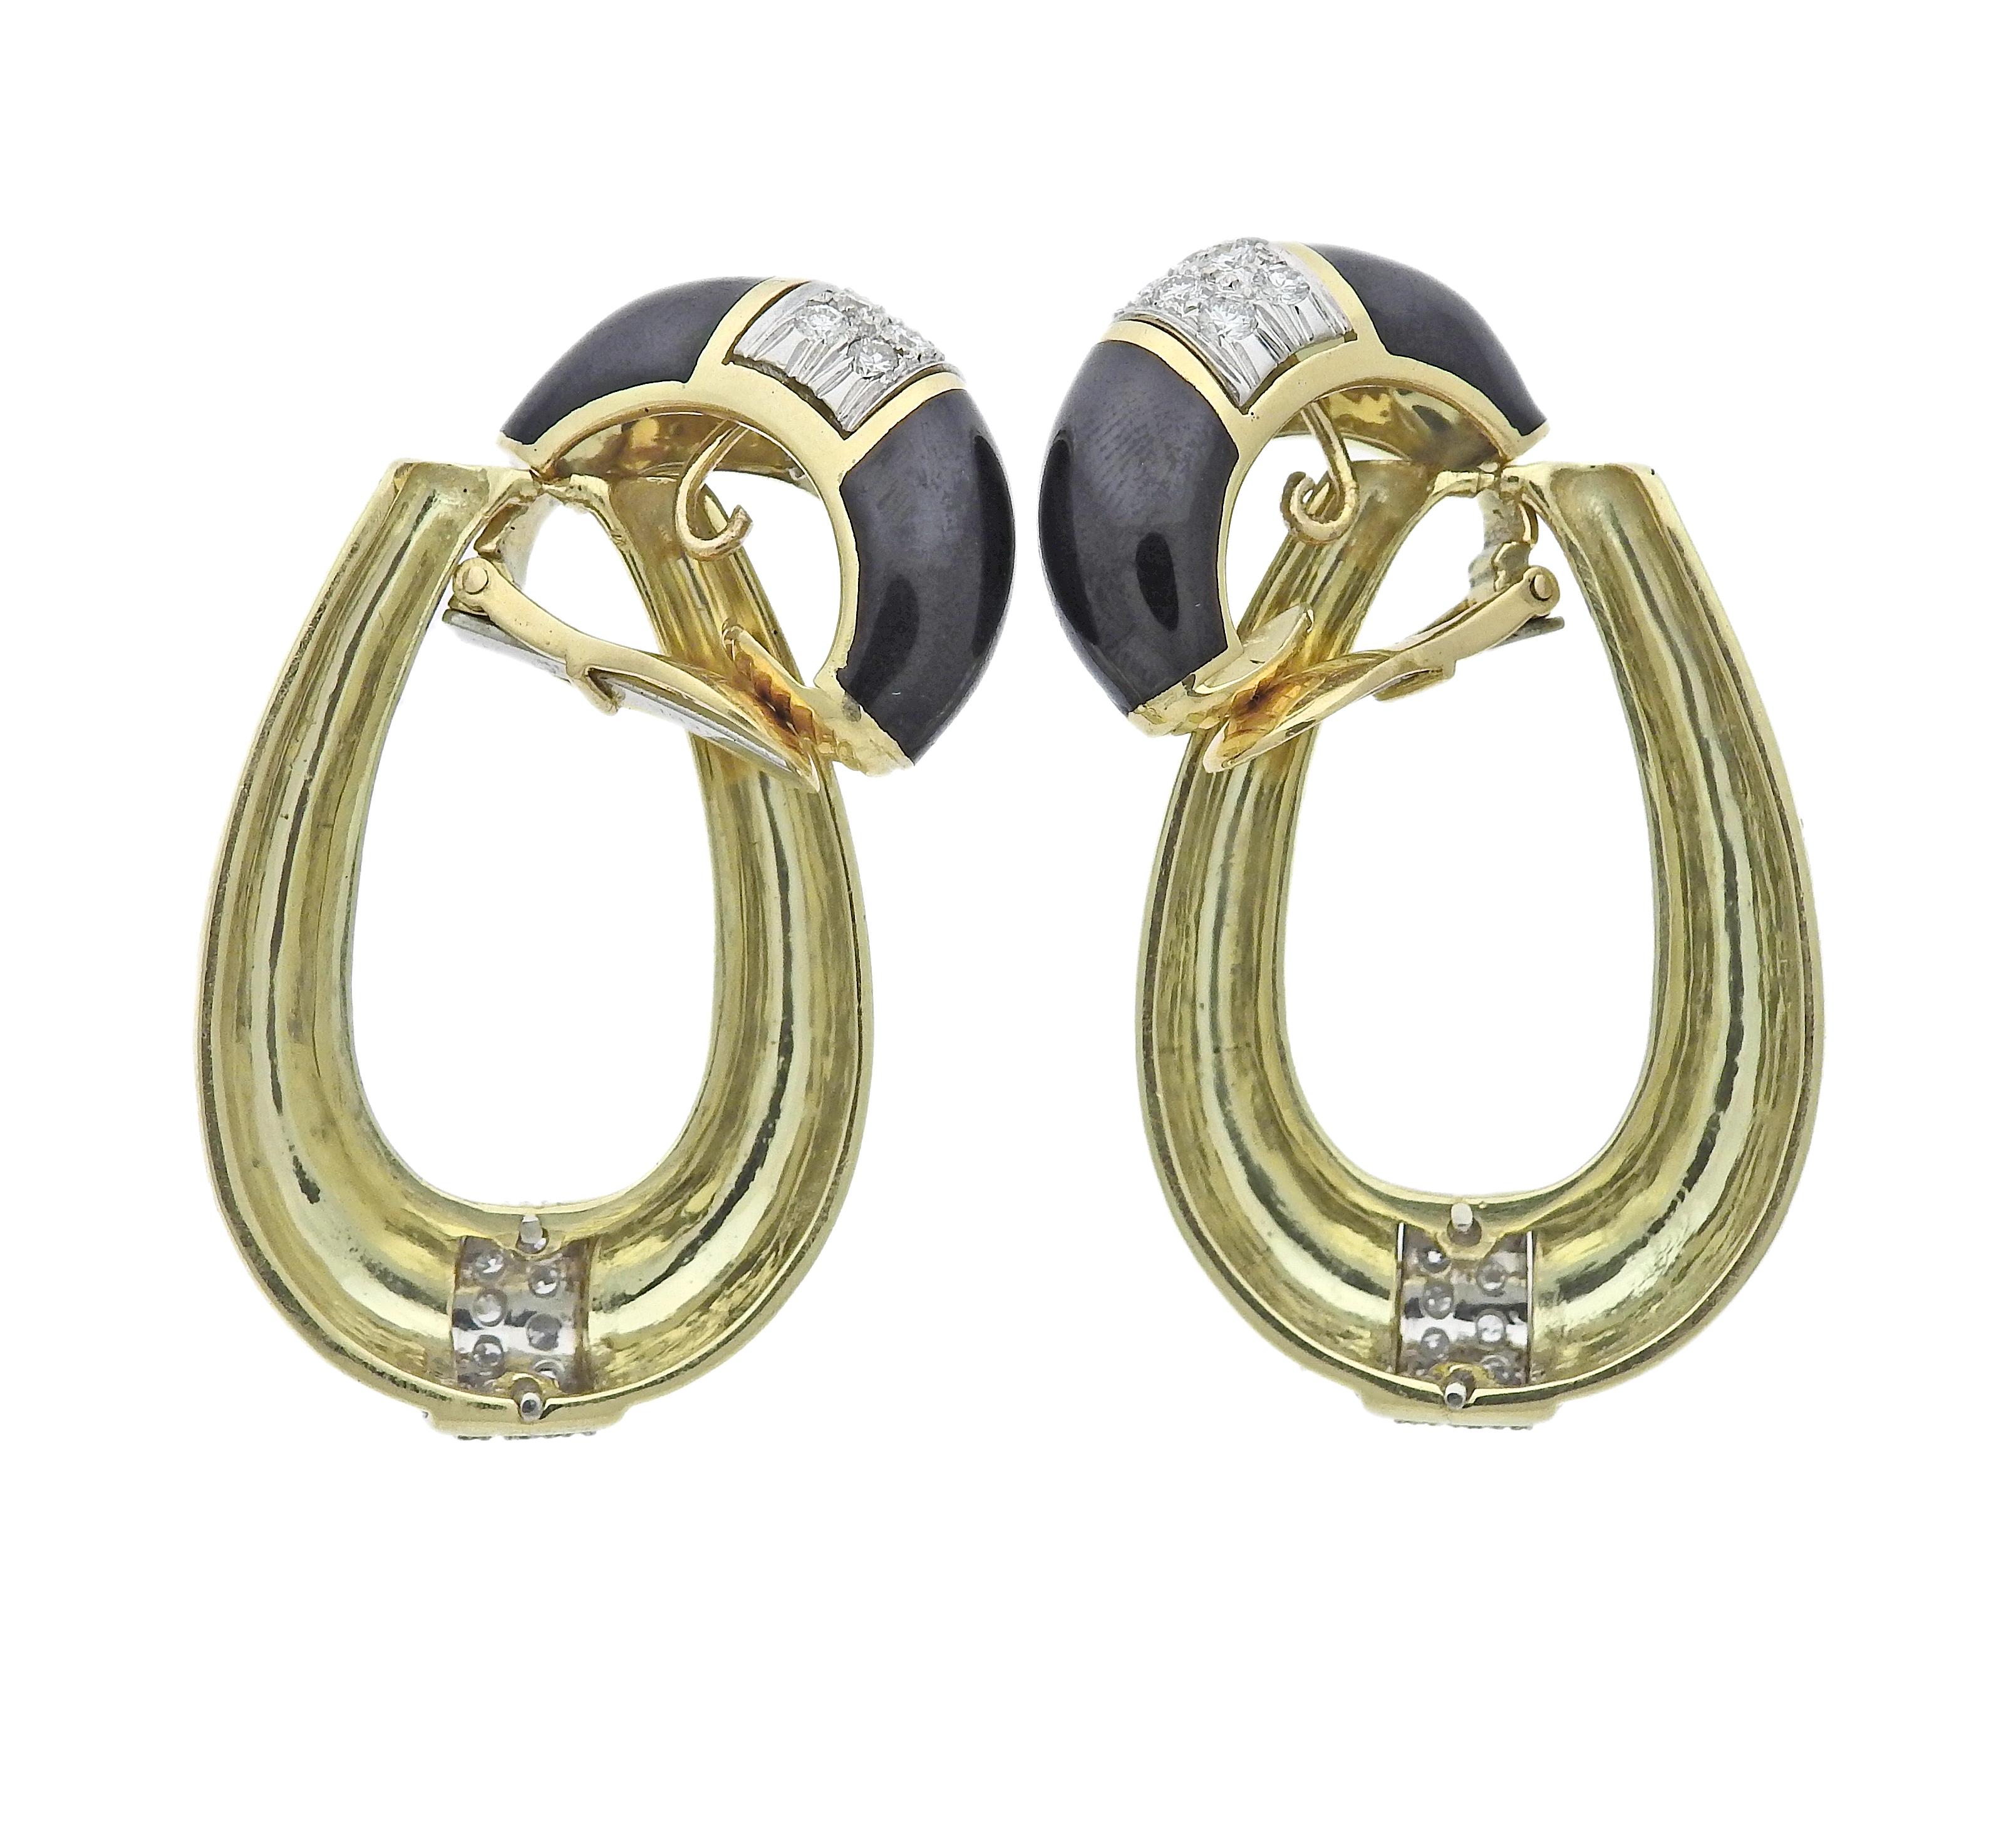 David Webb 18k gold and platinum doorknocker earrings set with approx. 1.00ctw in VS/H diamonds and black enamel. Earrings measure 55mm long, top hoop is 25mm. Marked: Webb, 18K, Plat. Weight is 42.6 grams.